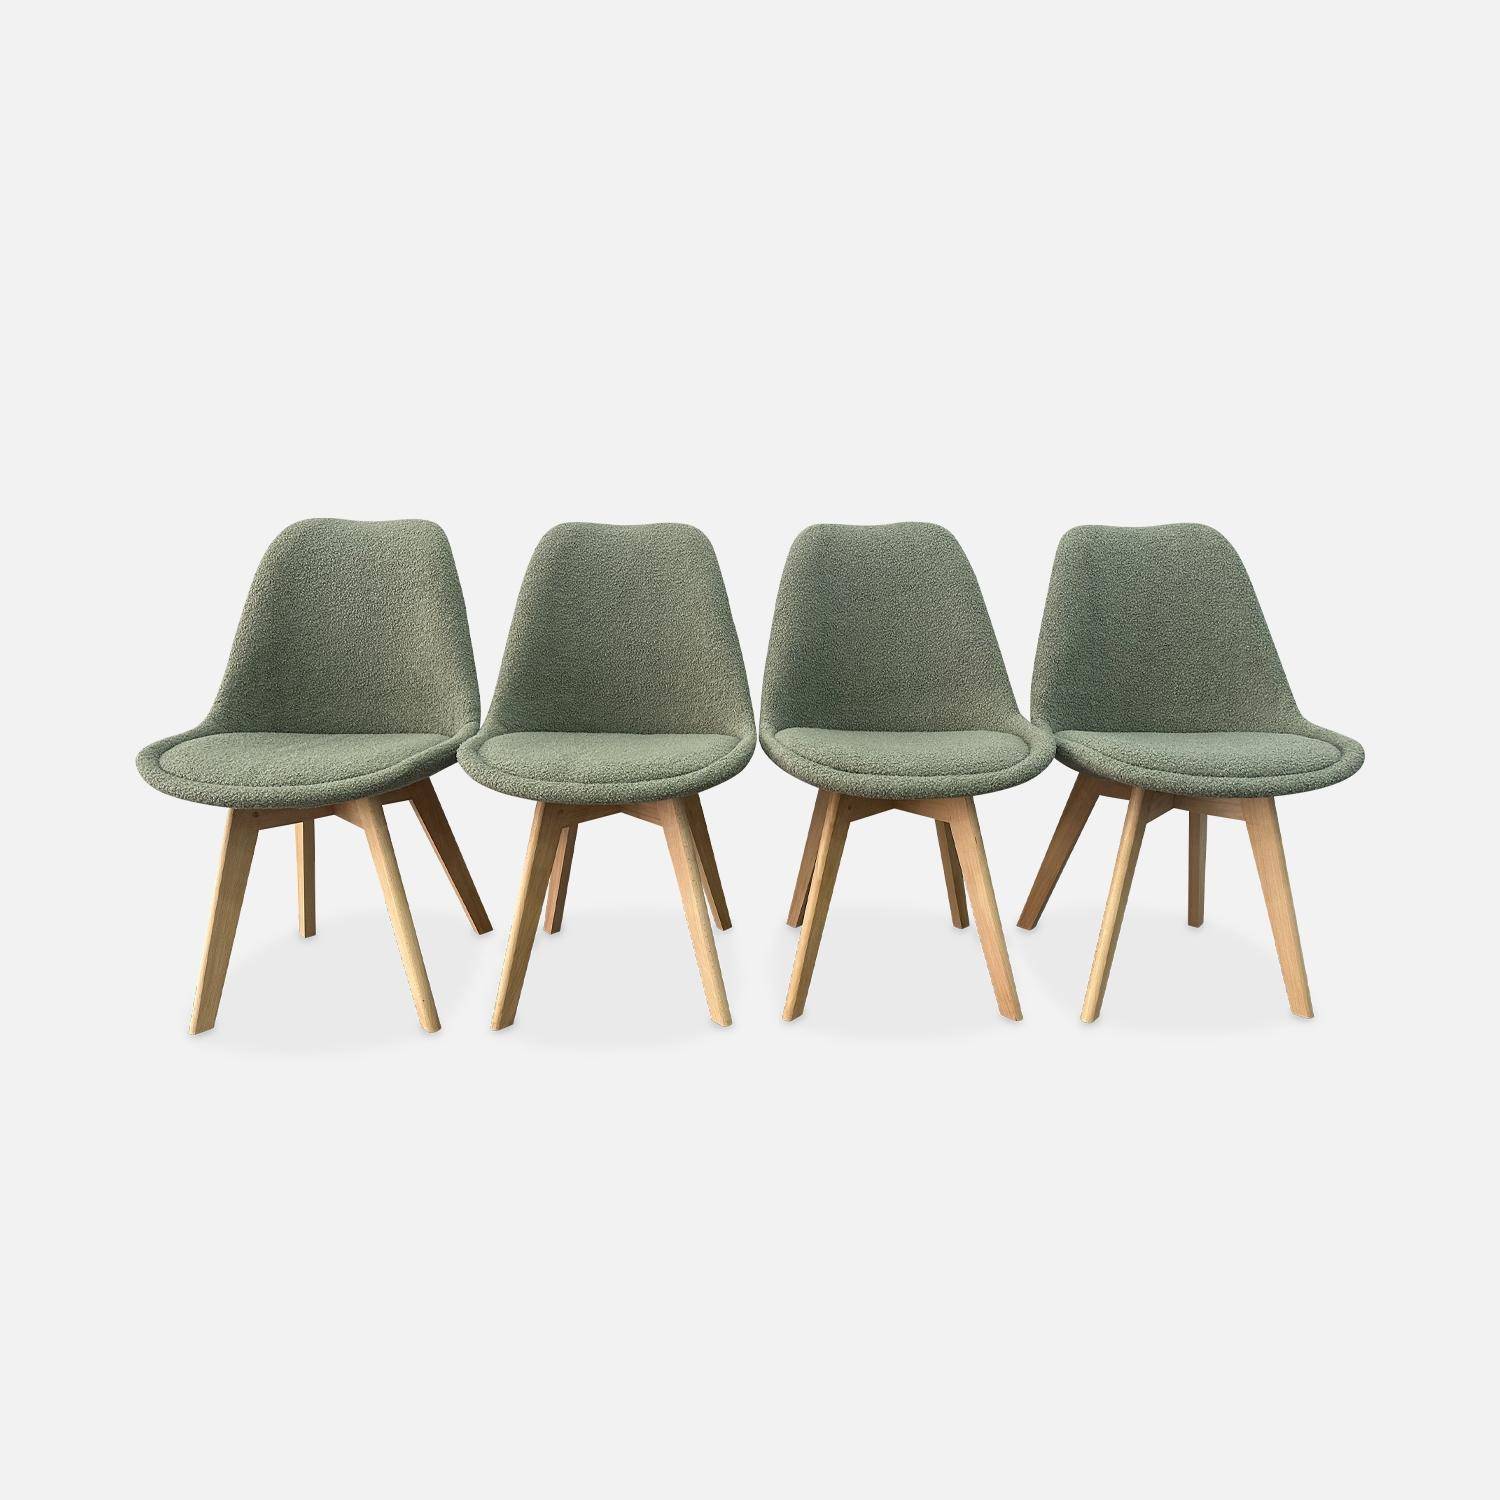 4er Set skandinavische Stühle mit blaßgrünem Bouclé-Bezug und Buchenholzbeinen - NILS ,sweeek,Photo1